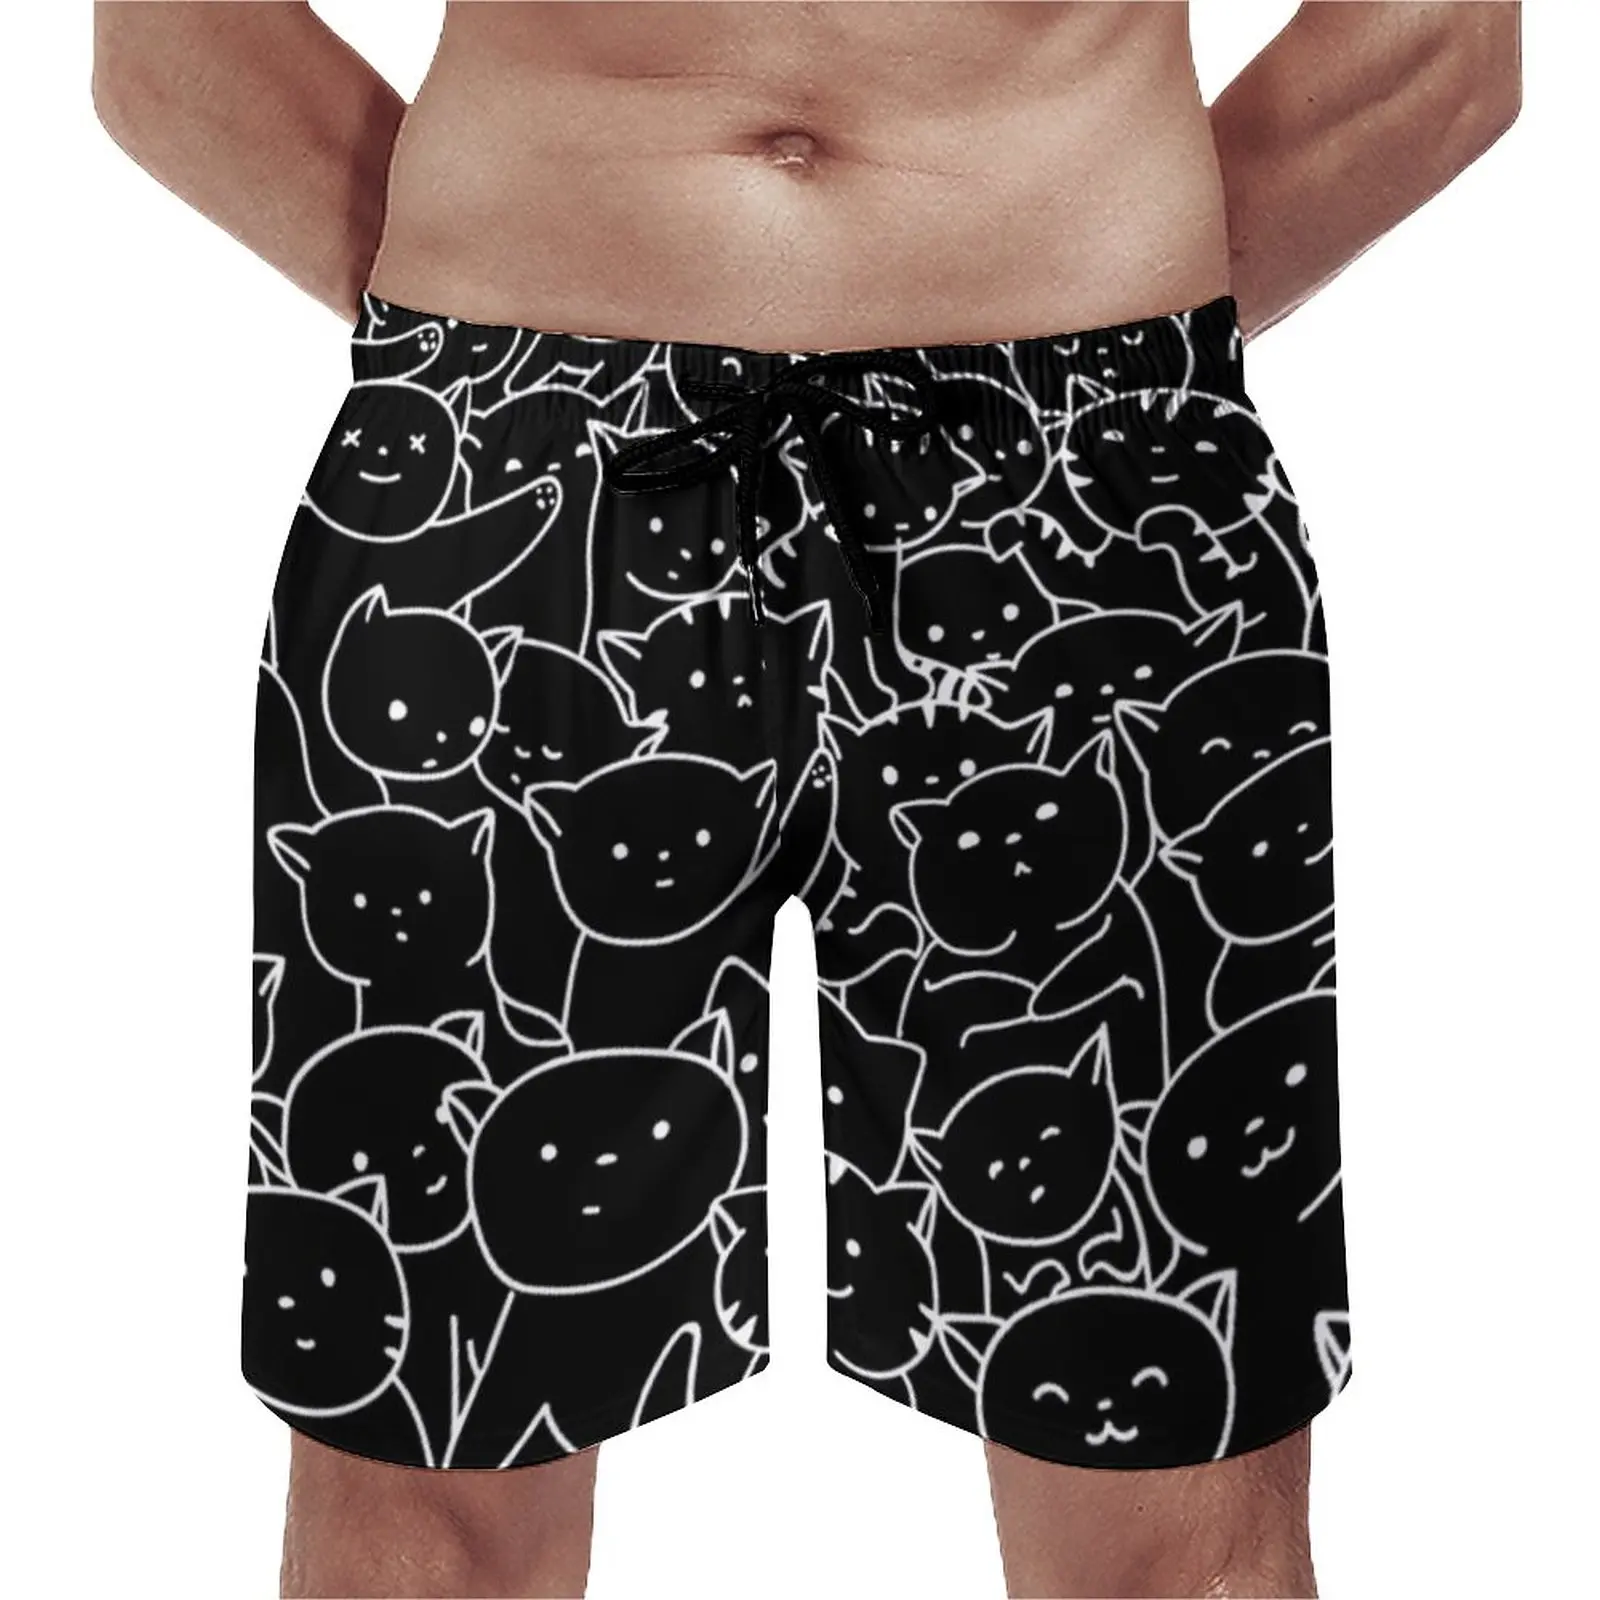 

Board Shorts Black Cat Meme Casual Swim Trunks Funny Cats Print Man Fast Dry Sports Fitness Hot Large Size Beach Short Pants